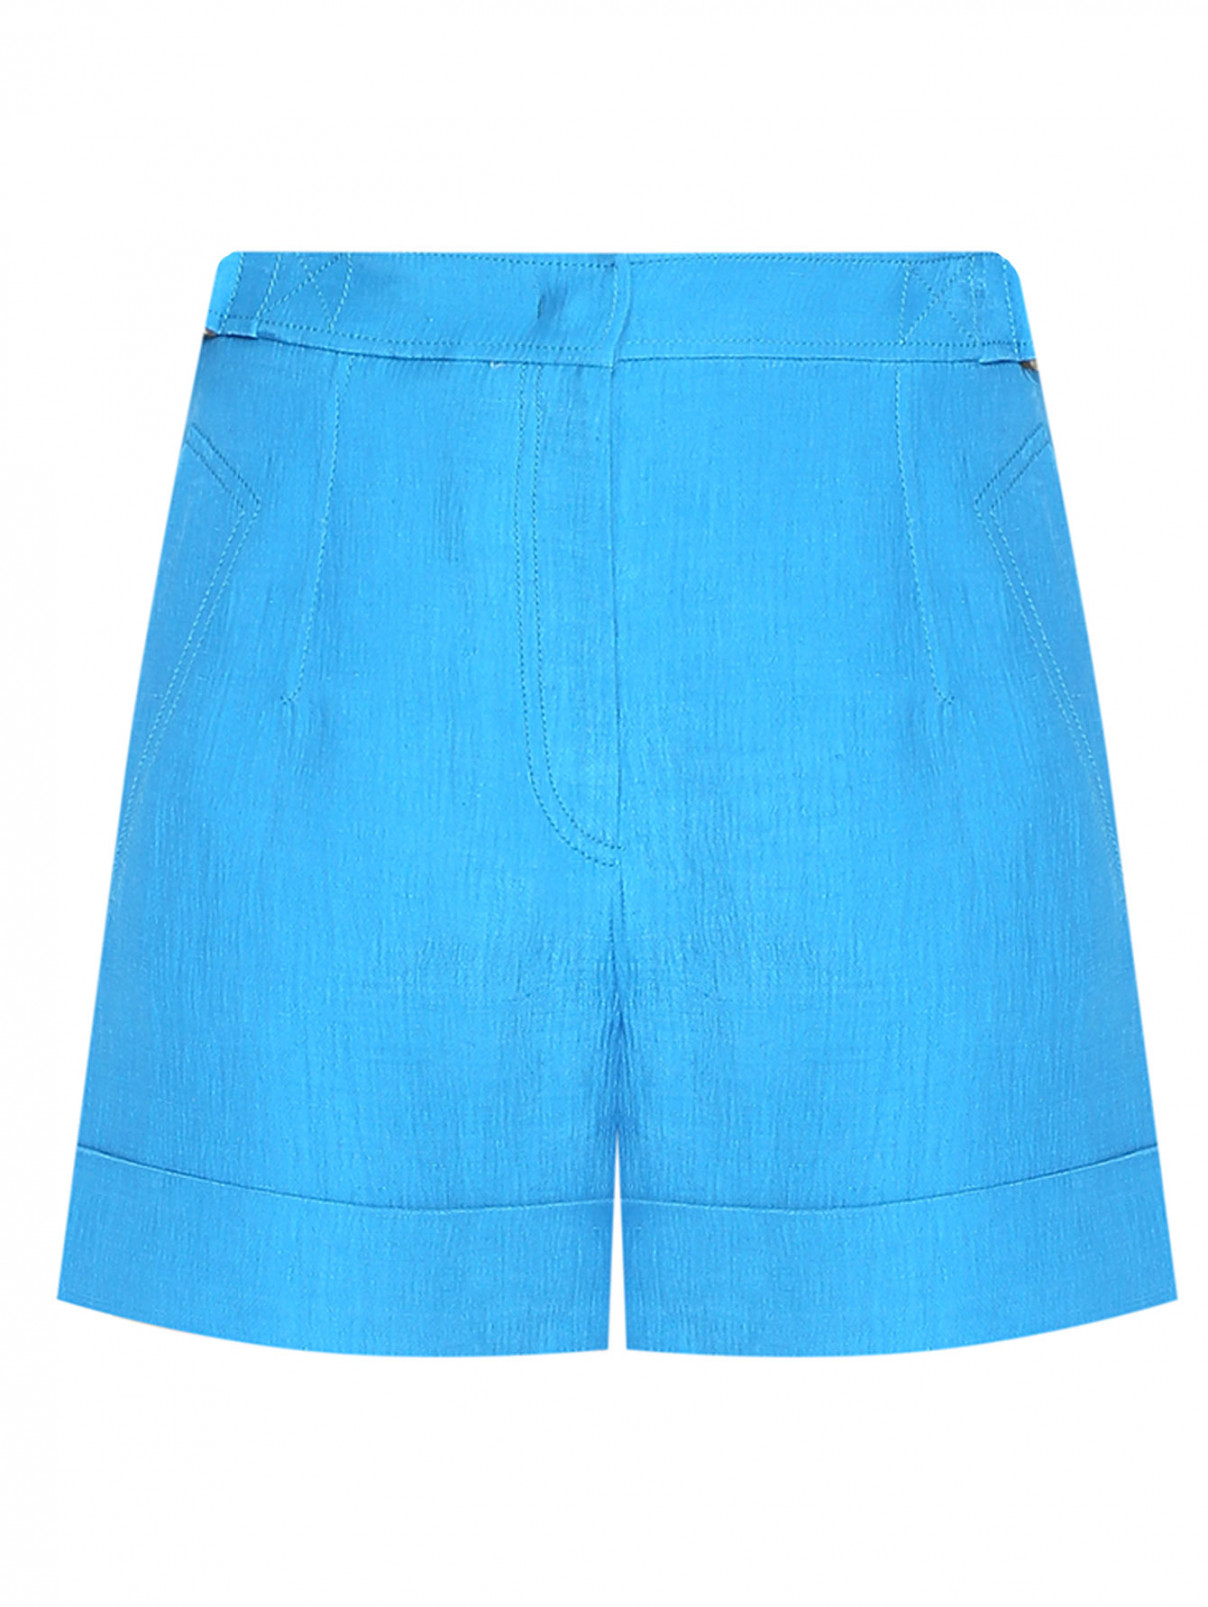 Шорты из вискозы с карманами Alberta Ferretti  –  Общий вид  – Цвет:  Синий